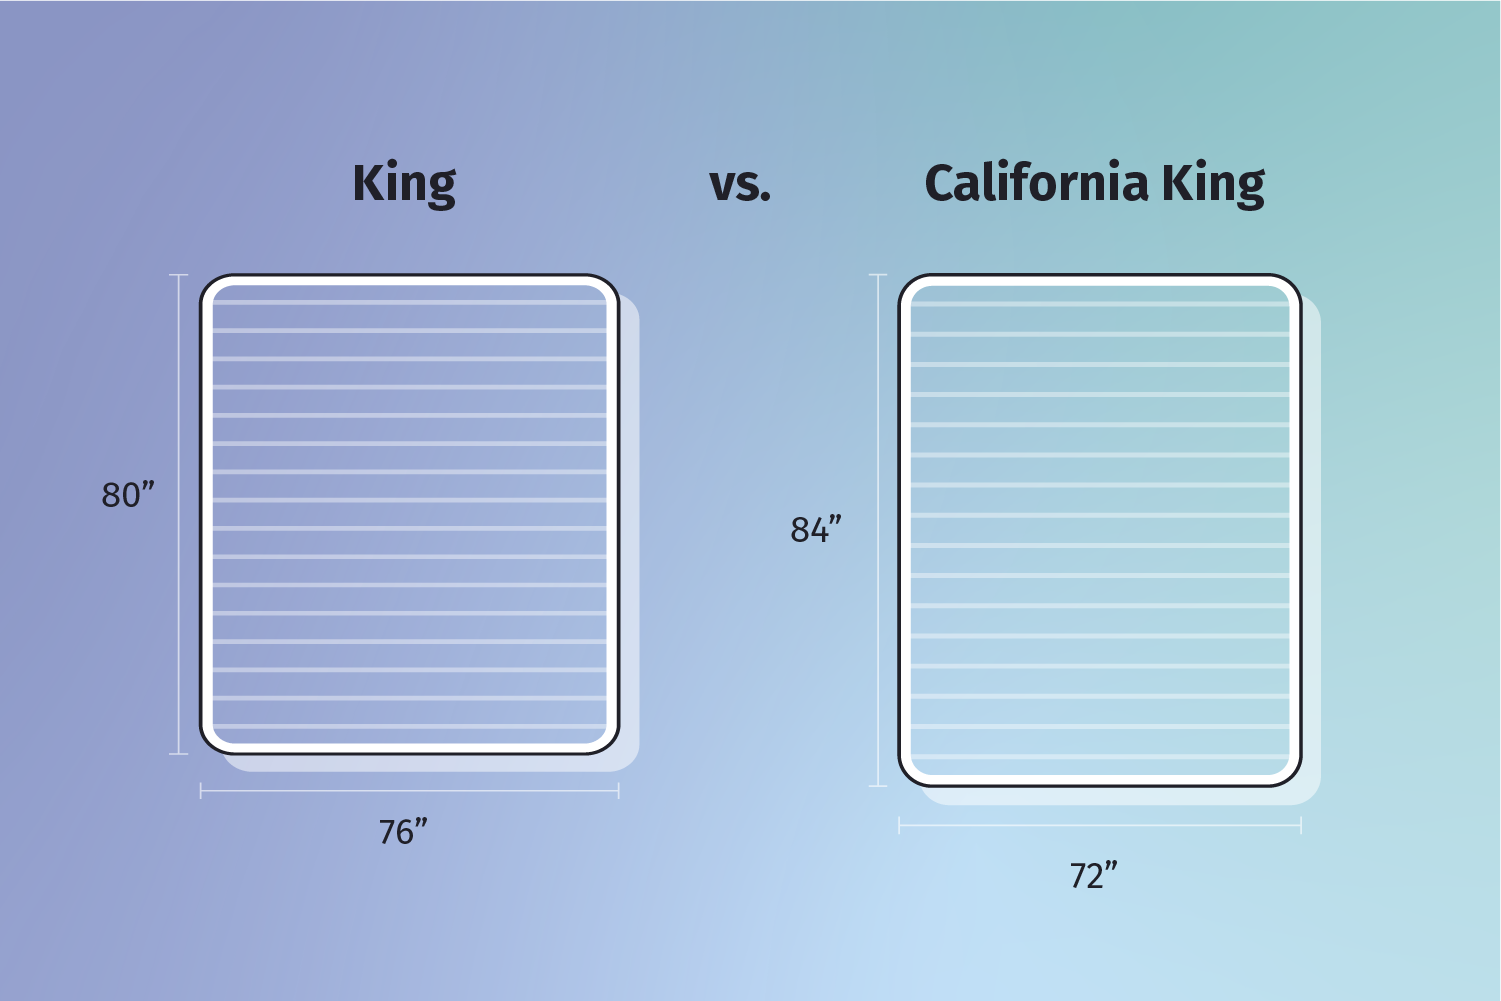 differece between california king and king mattress